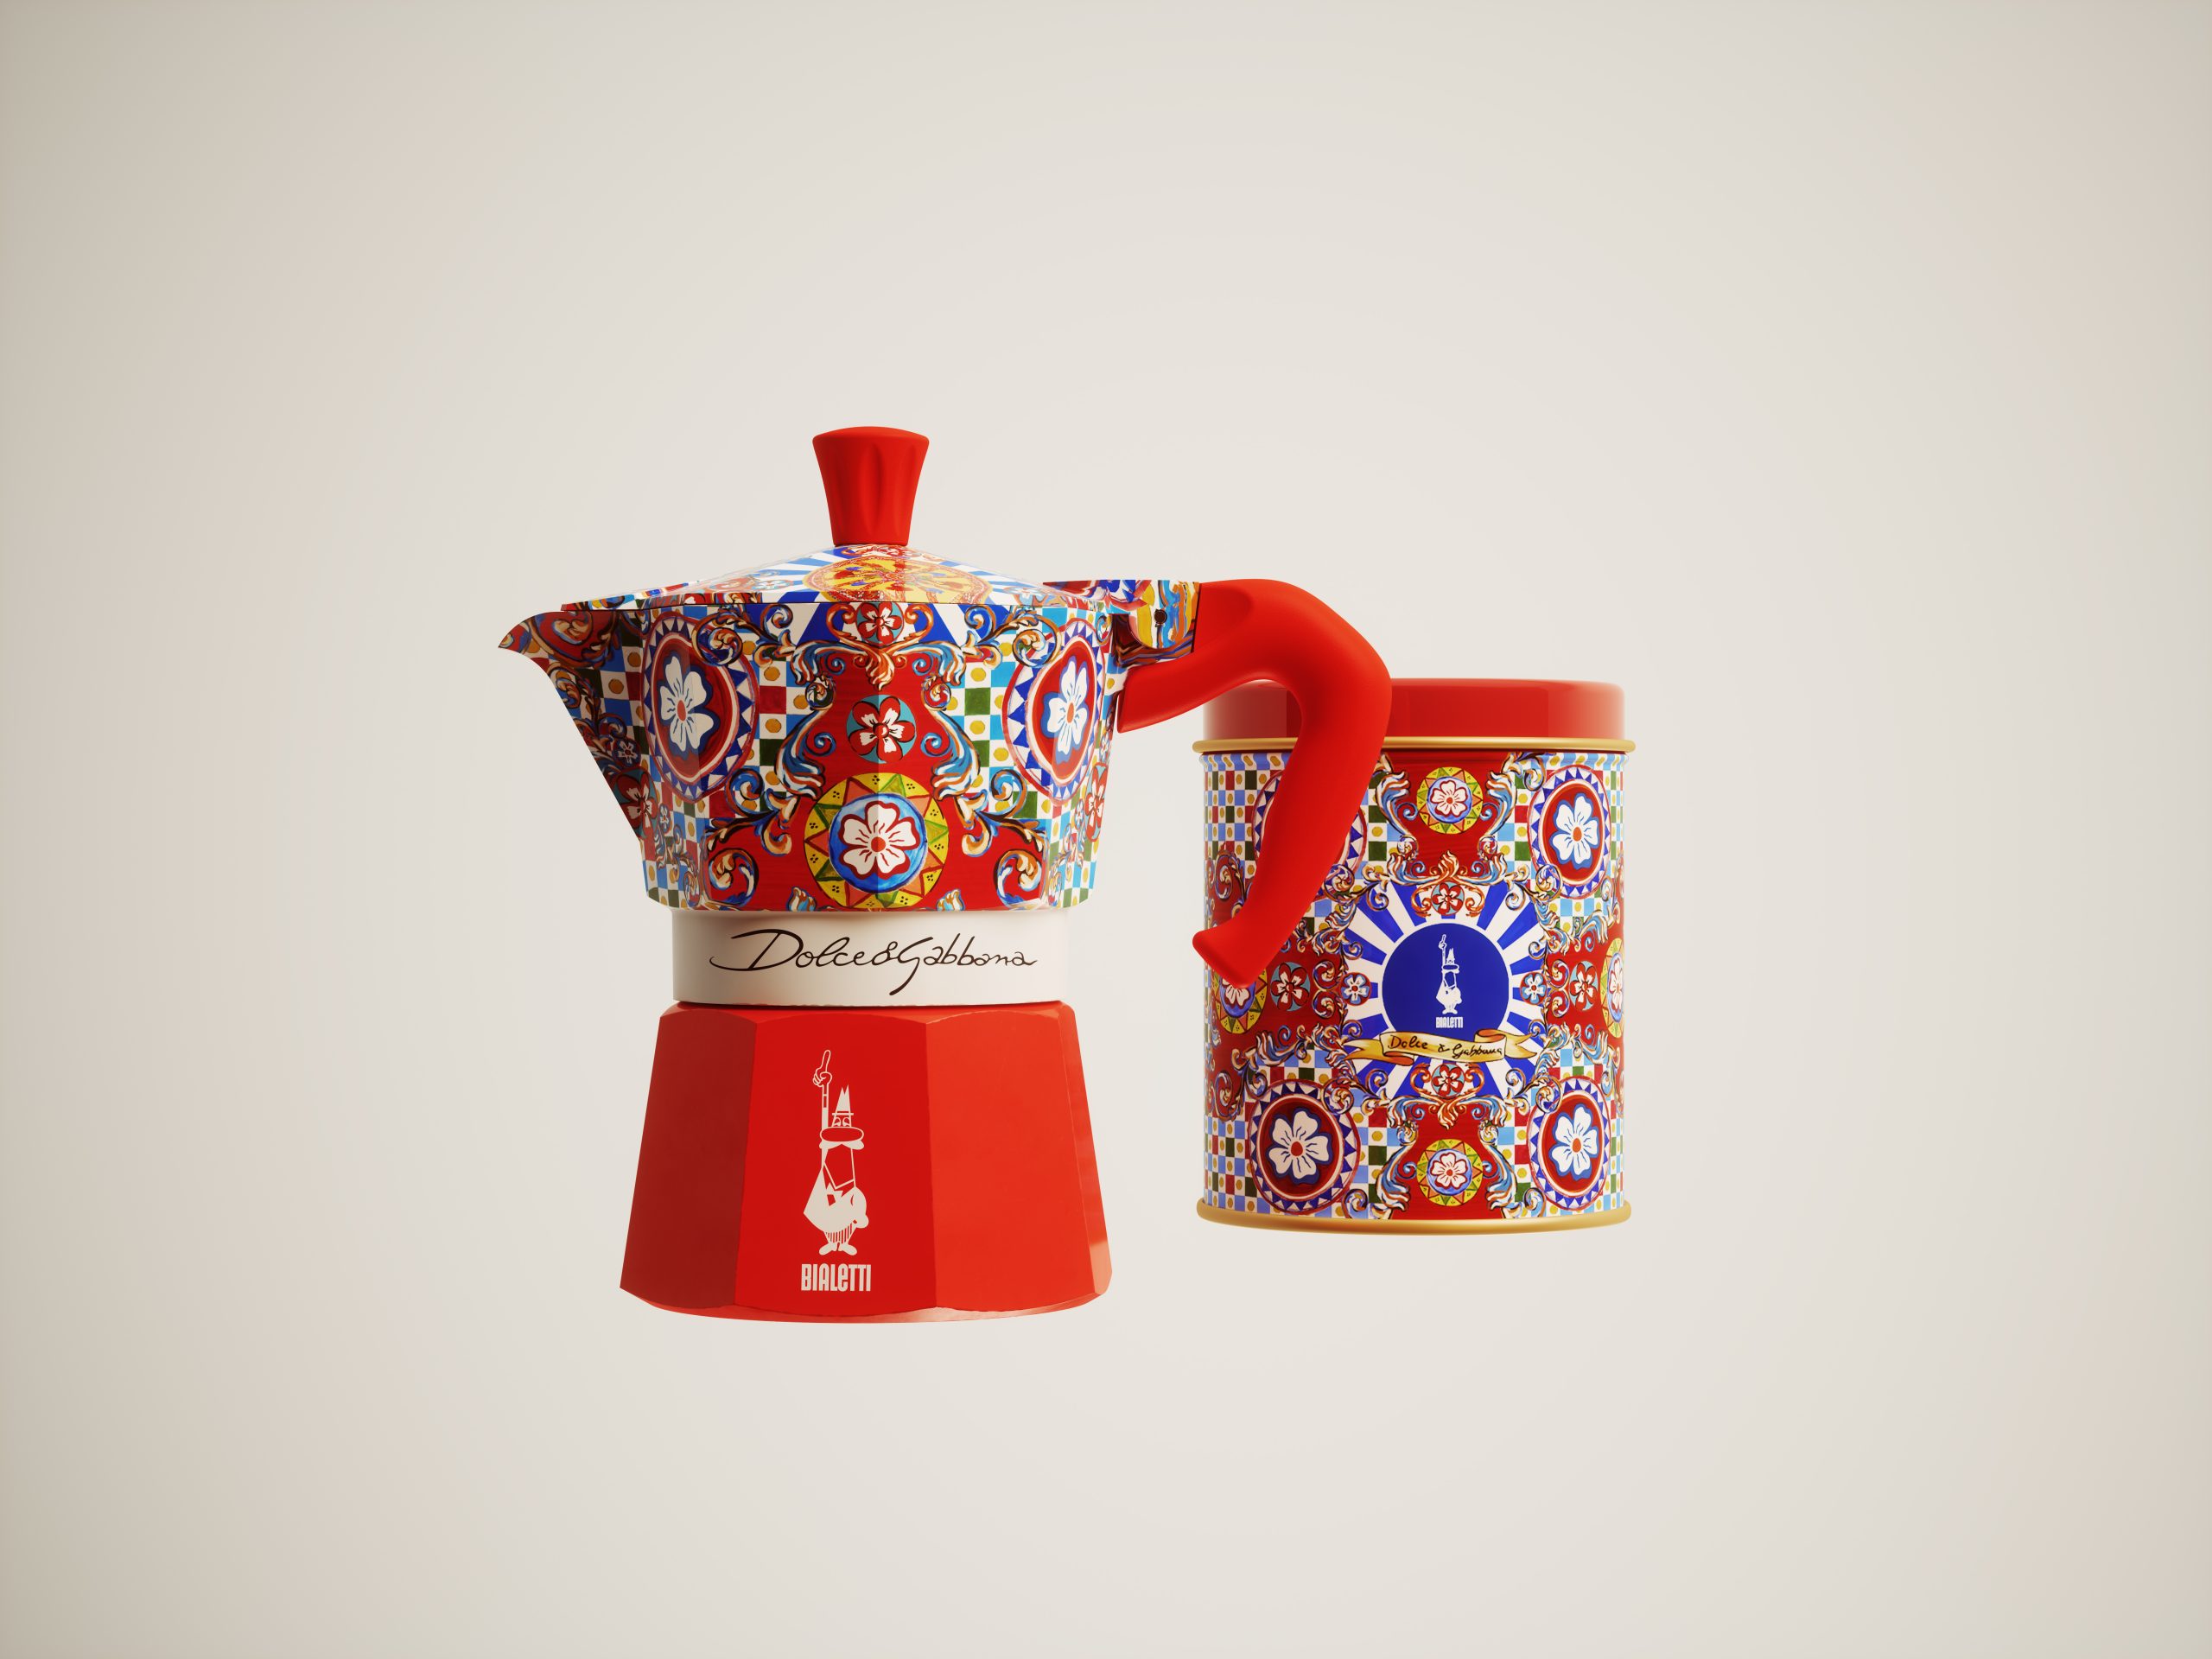 Bialetti x Dolce&Gabbana x Bialetti Moka Express 3-Cup Stovetop Coffee Pot